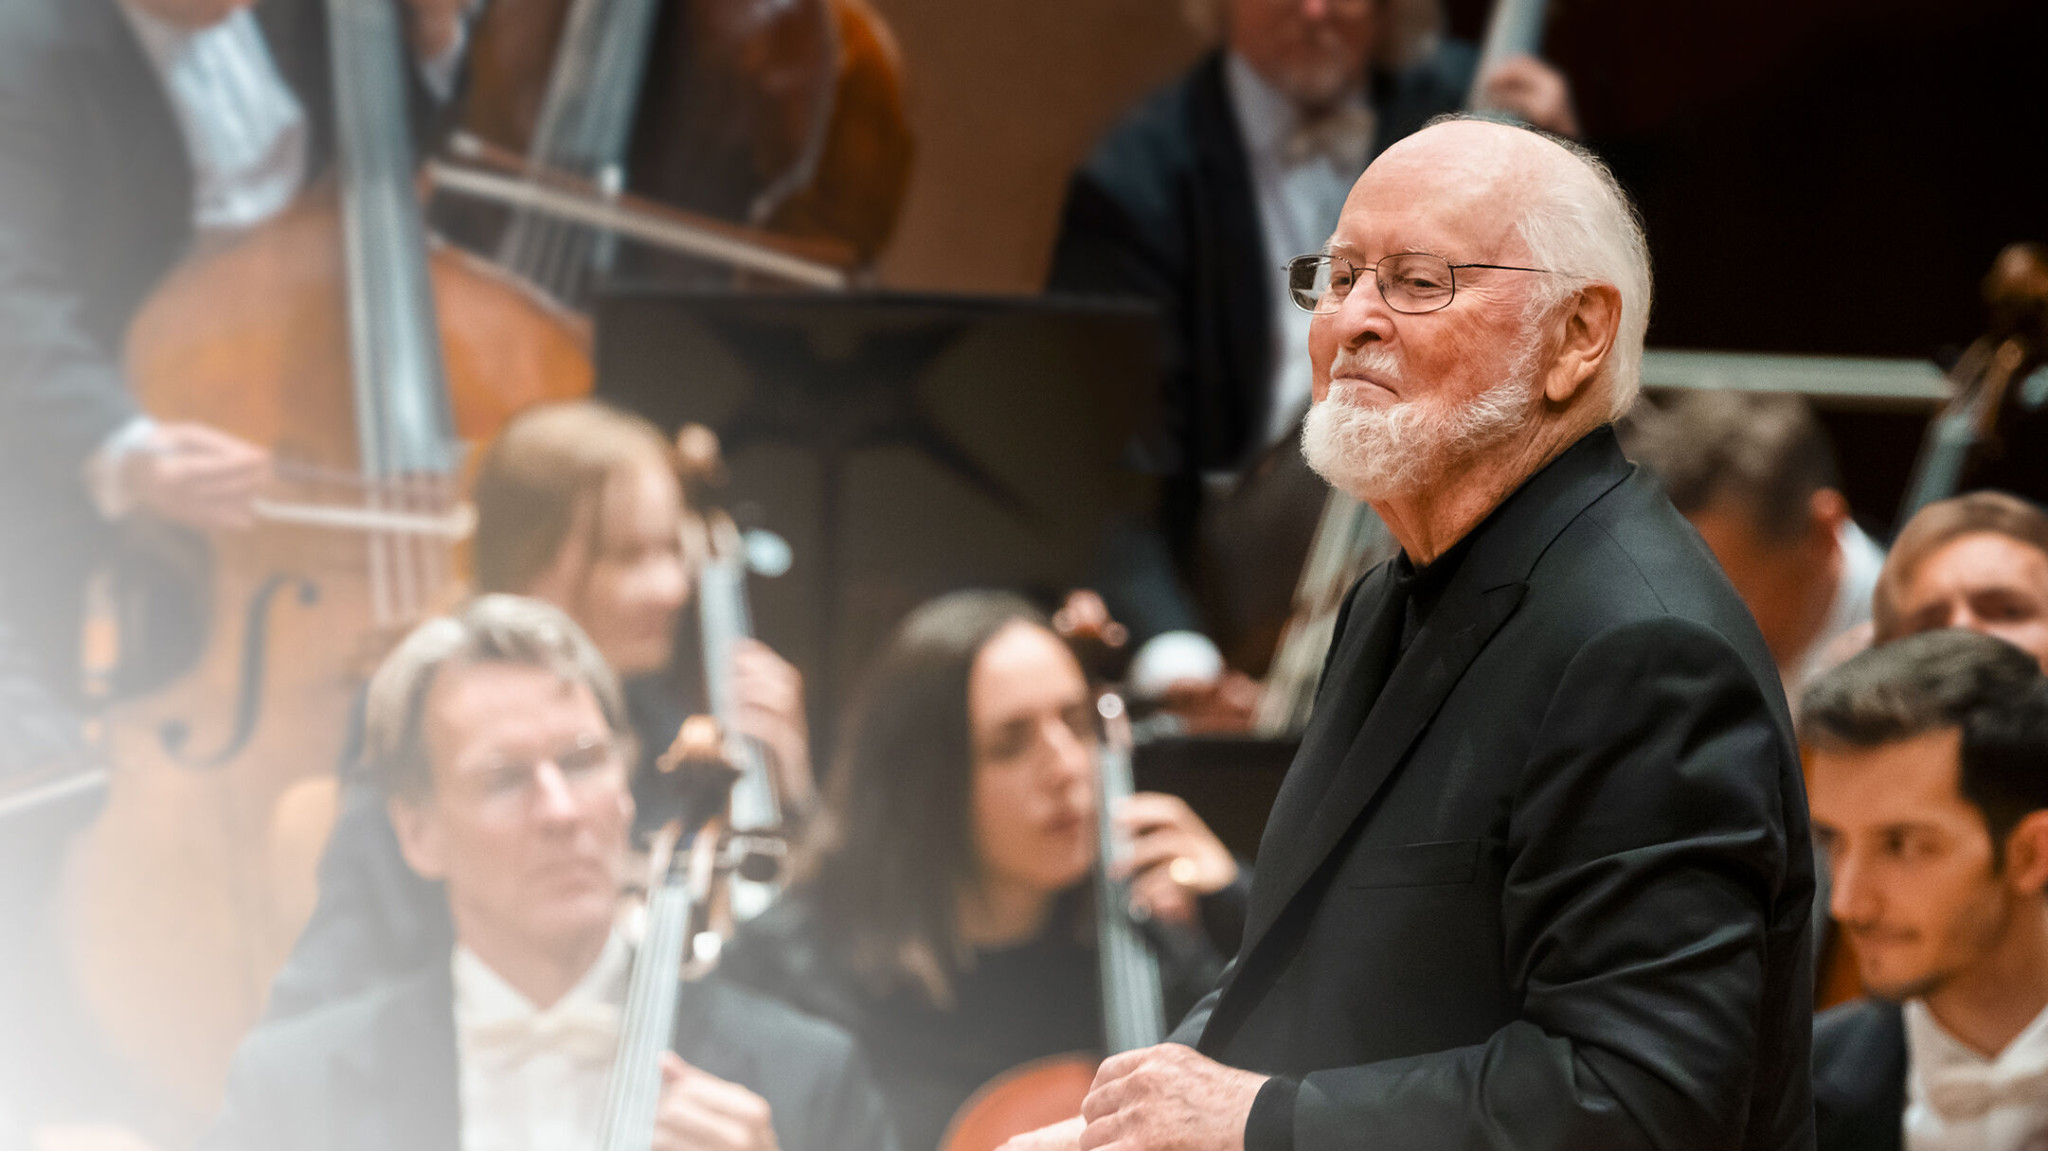 'The Berlin Concert' - Celebrating John Williams on His 90th Birthday